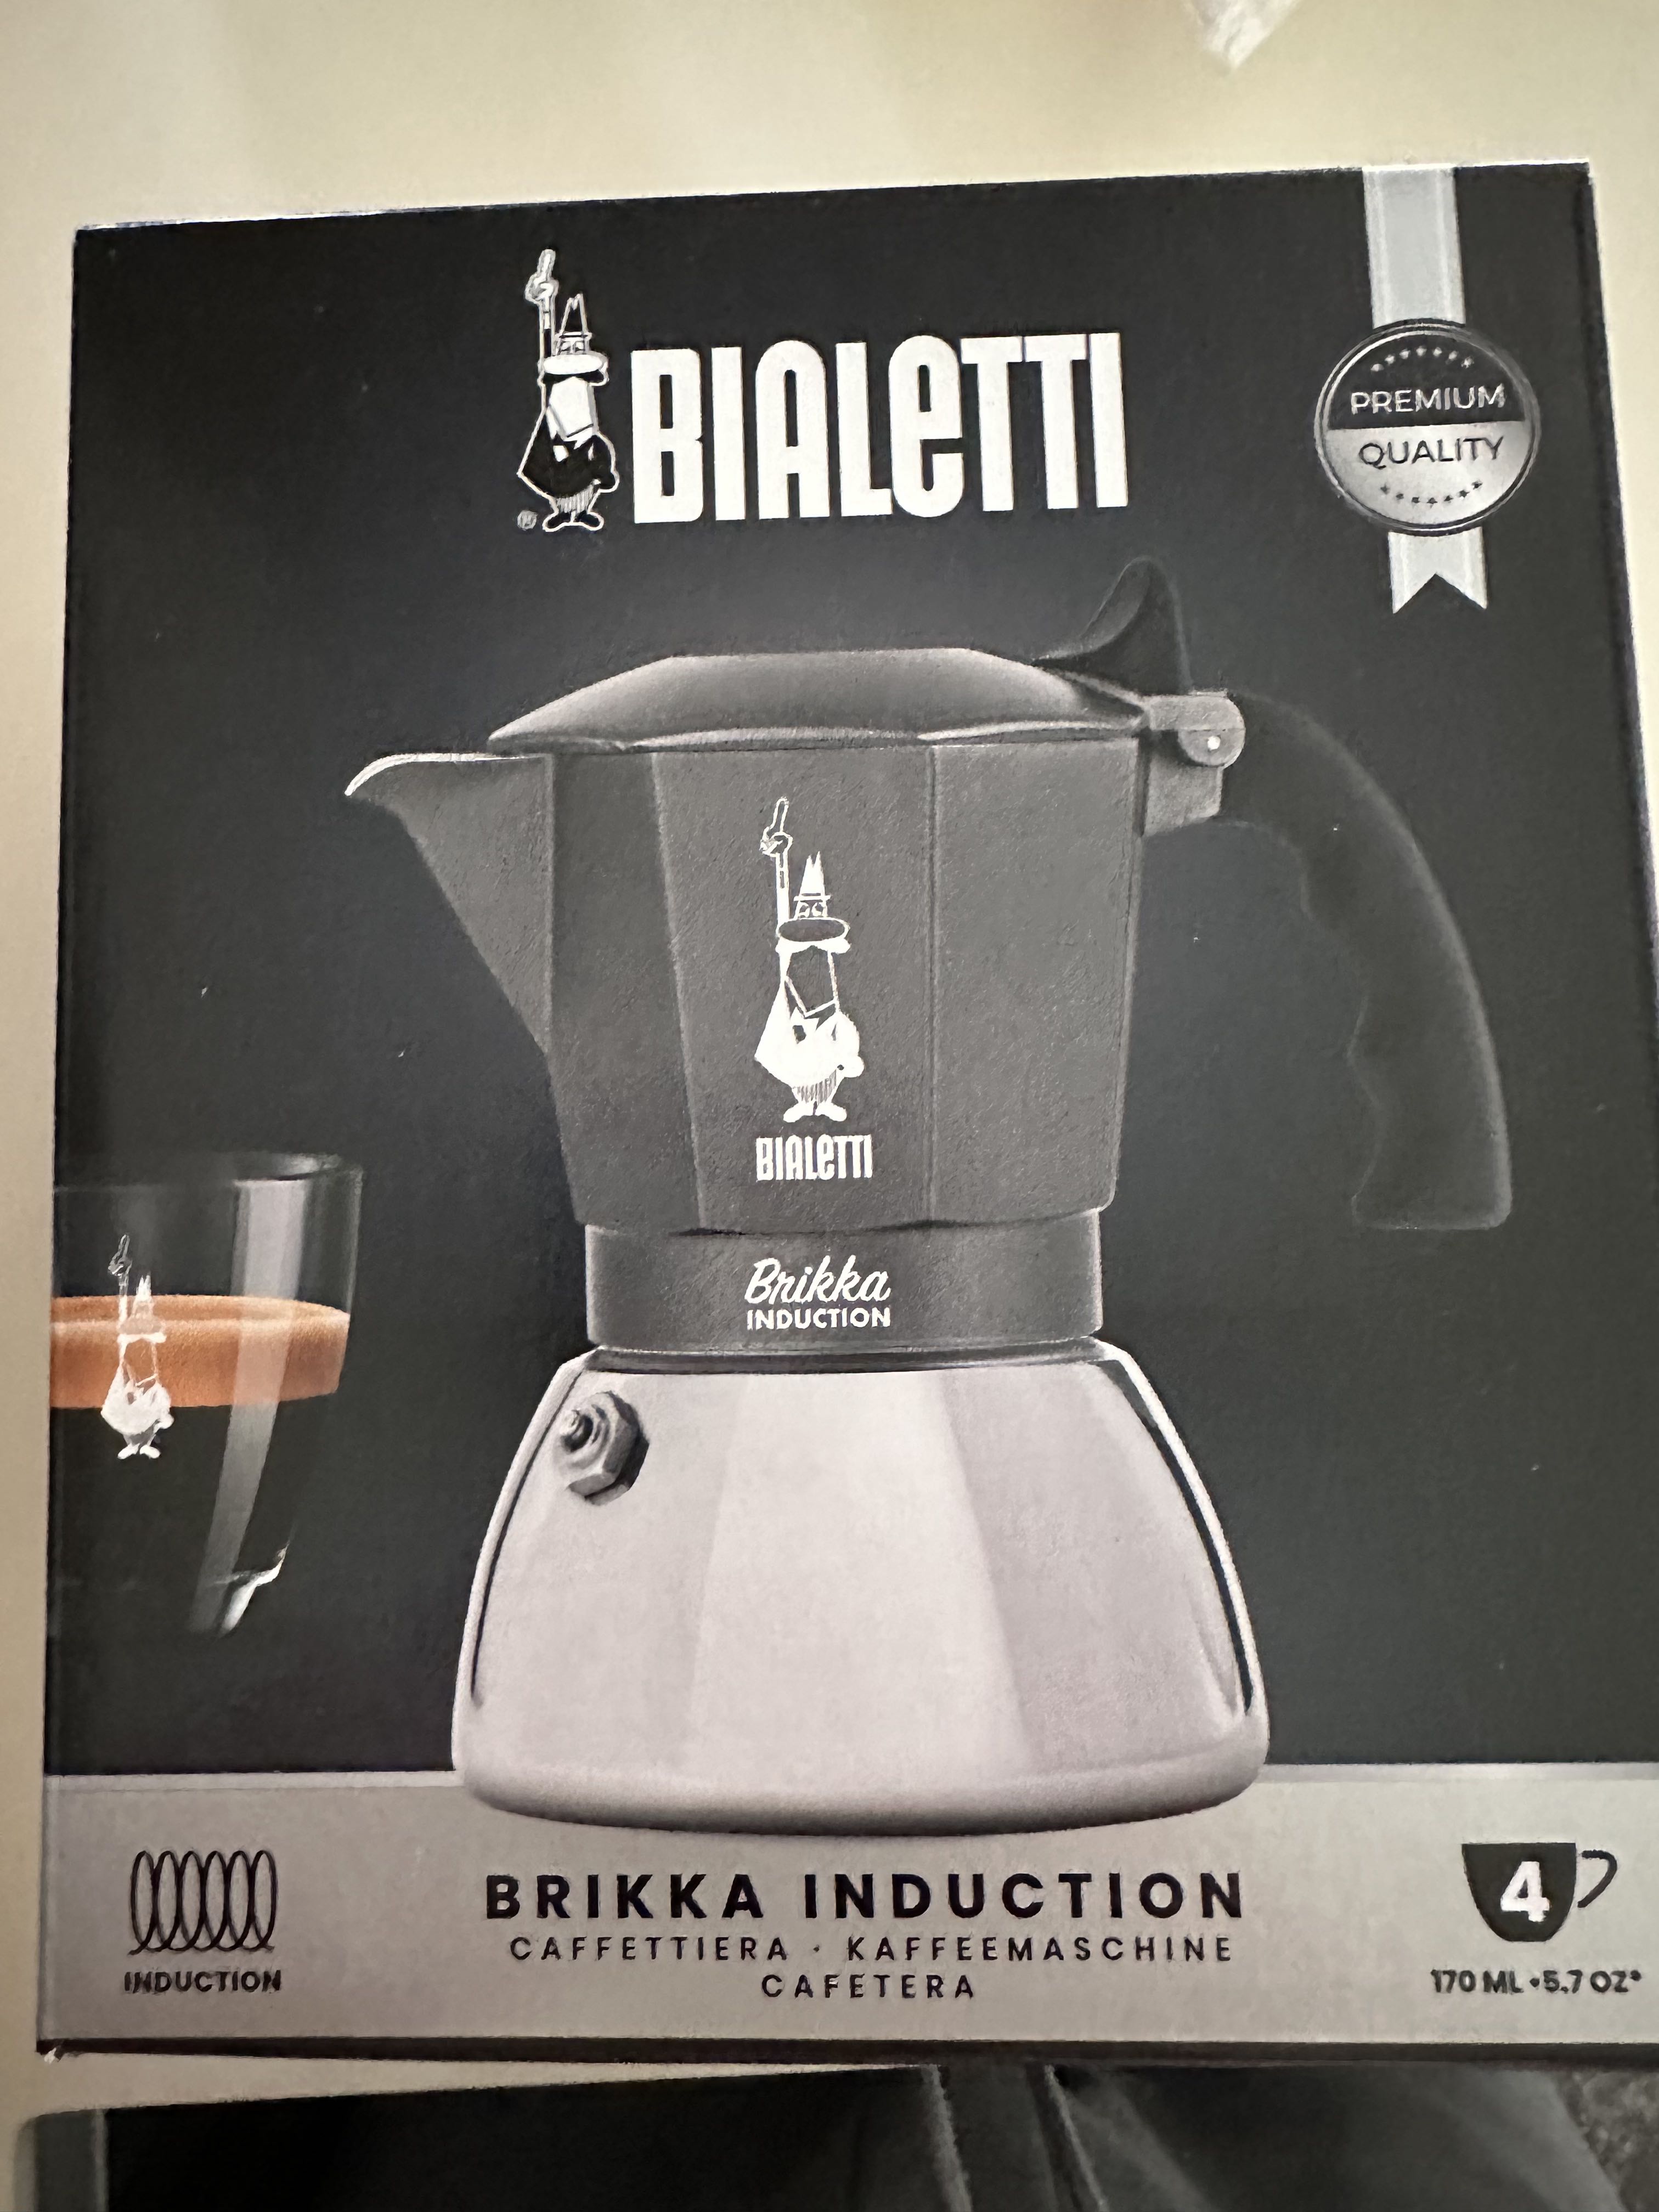 Brikka Induction - Bialetti